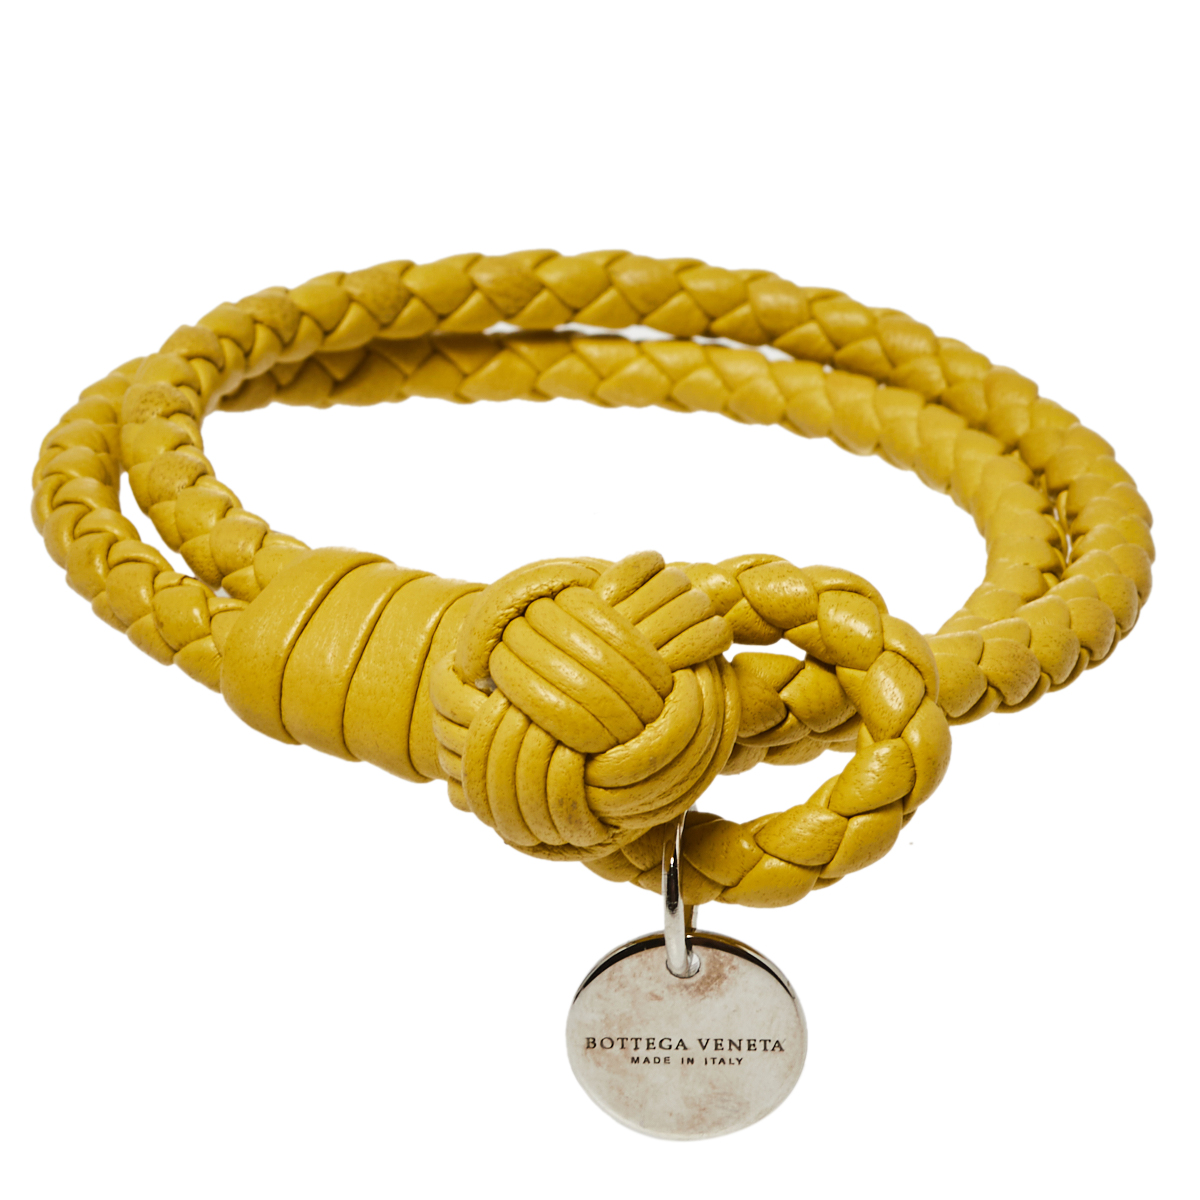 Bottega Veneta Yellow Intrecciato Nappa Leather Double Strand Bracelet M